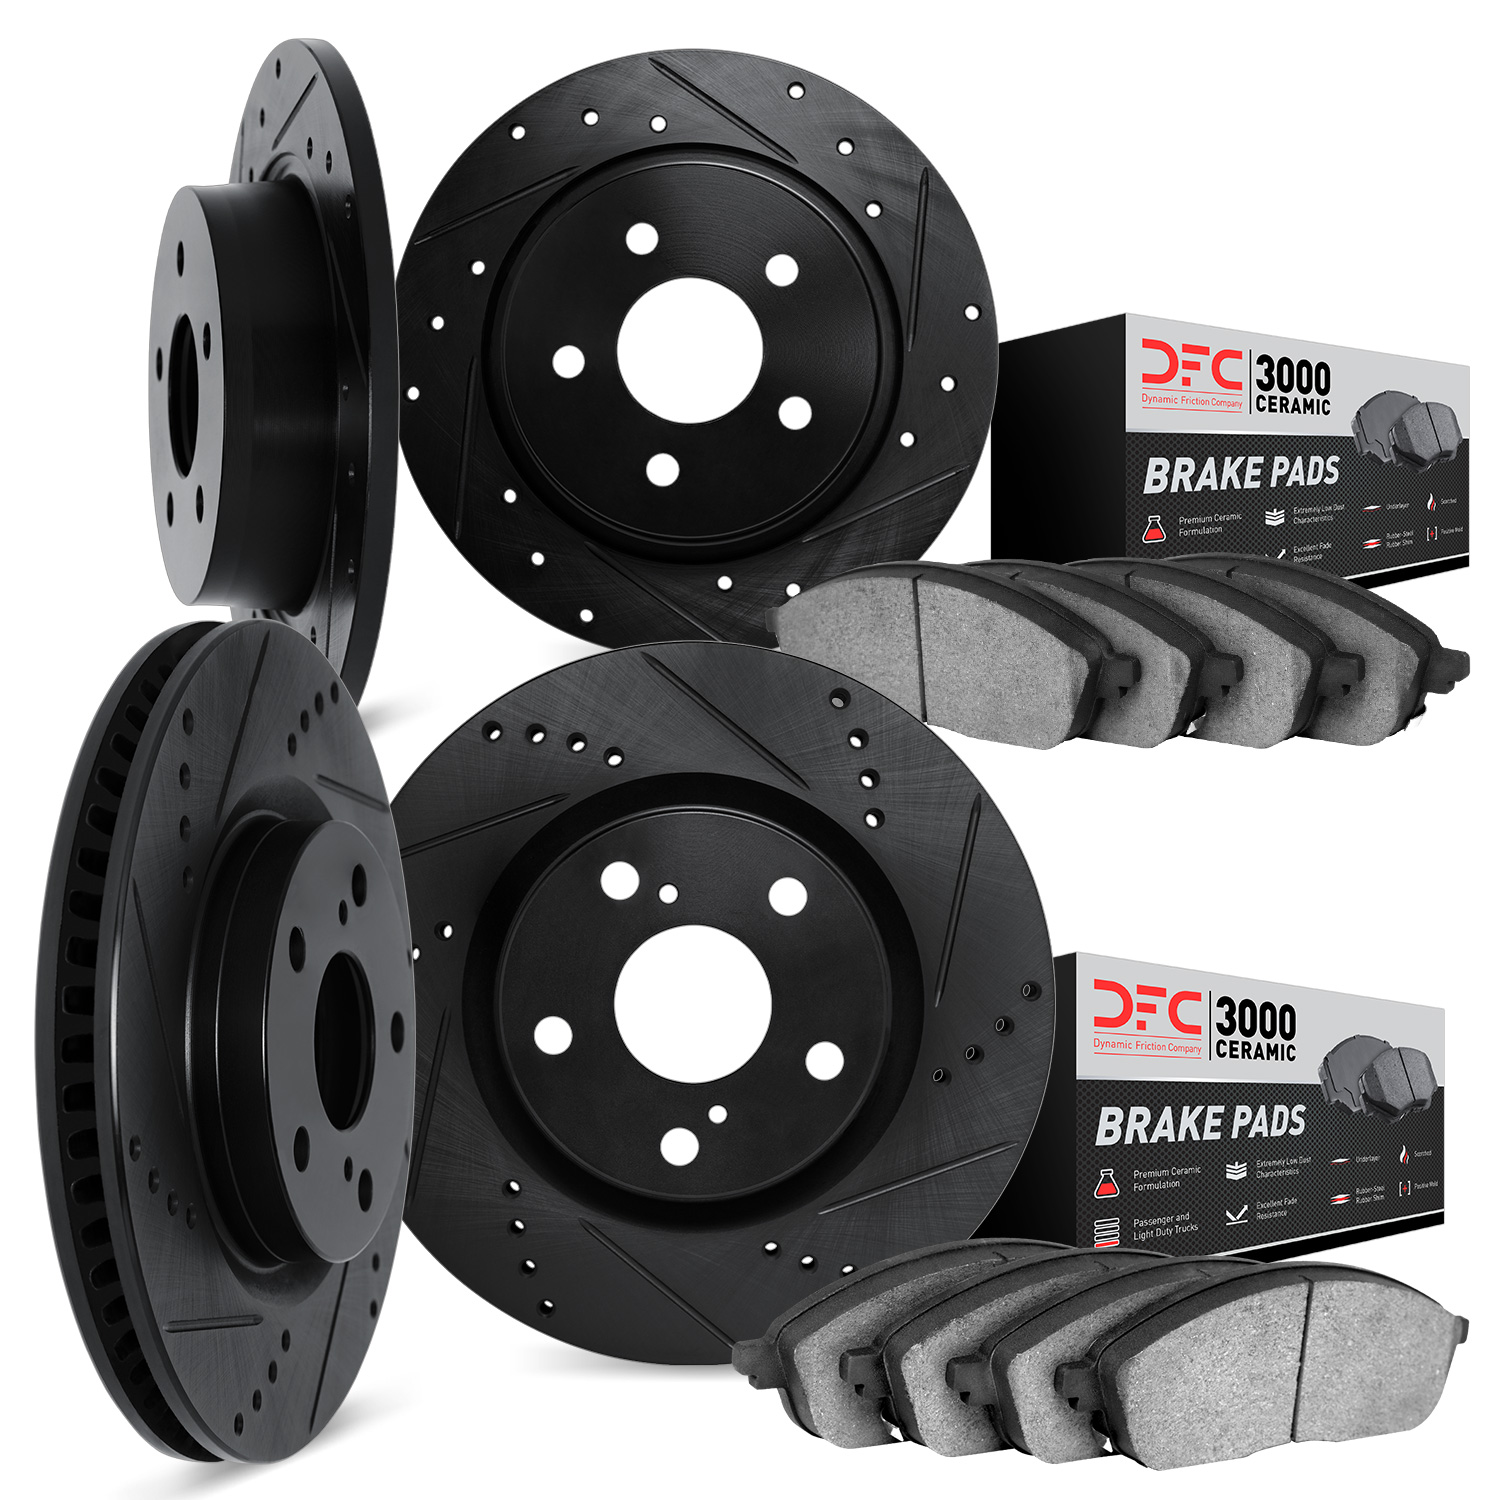 8304-39011 Drilled/Slotted Brake Rotors with 3000-Series Ceramic Brake Pads Kit [Black], 2007-2016 Multiple Makes/Models, Positi